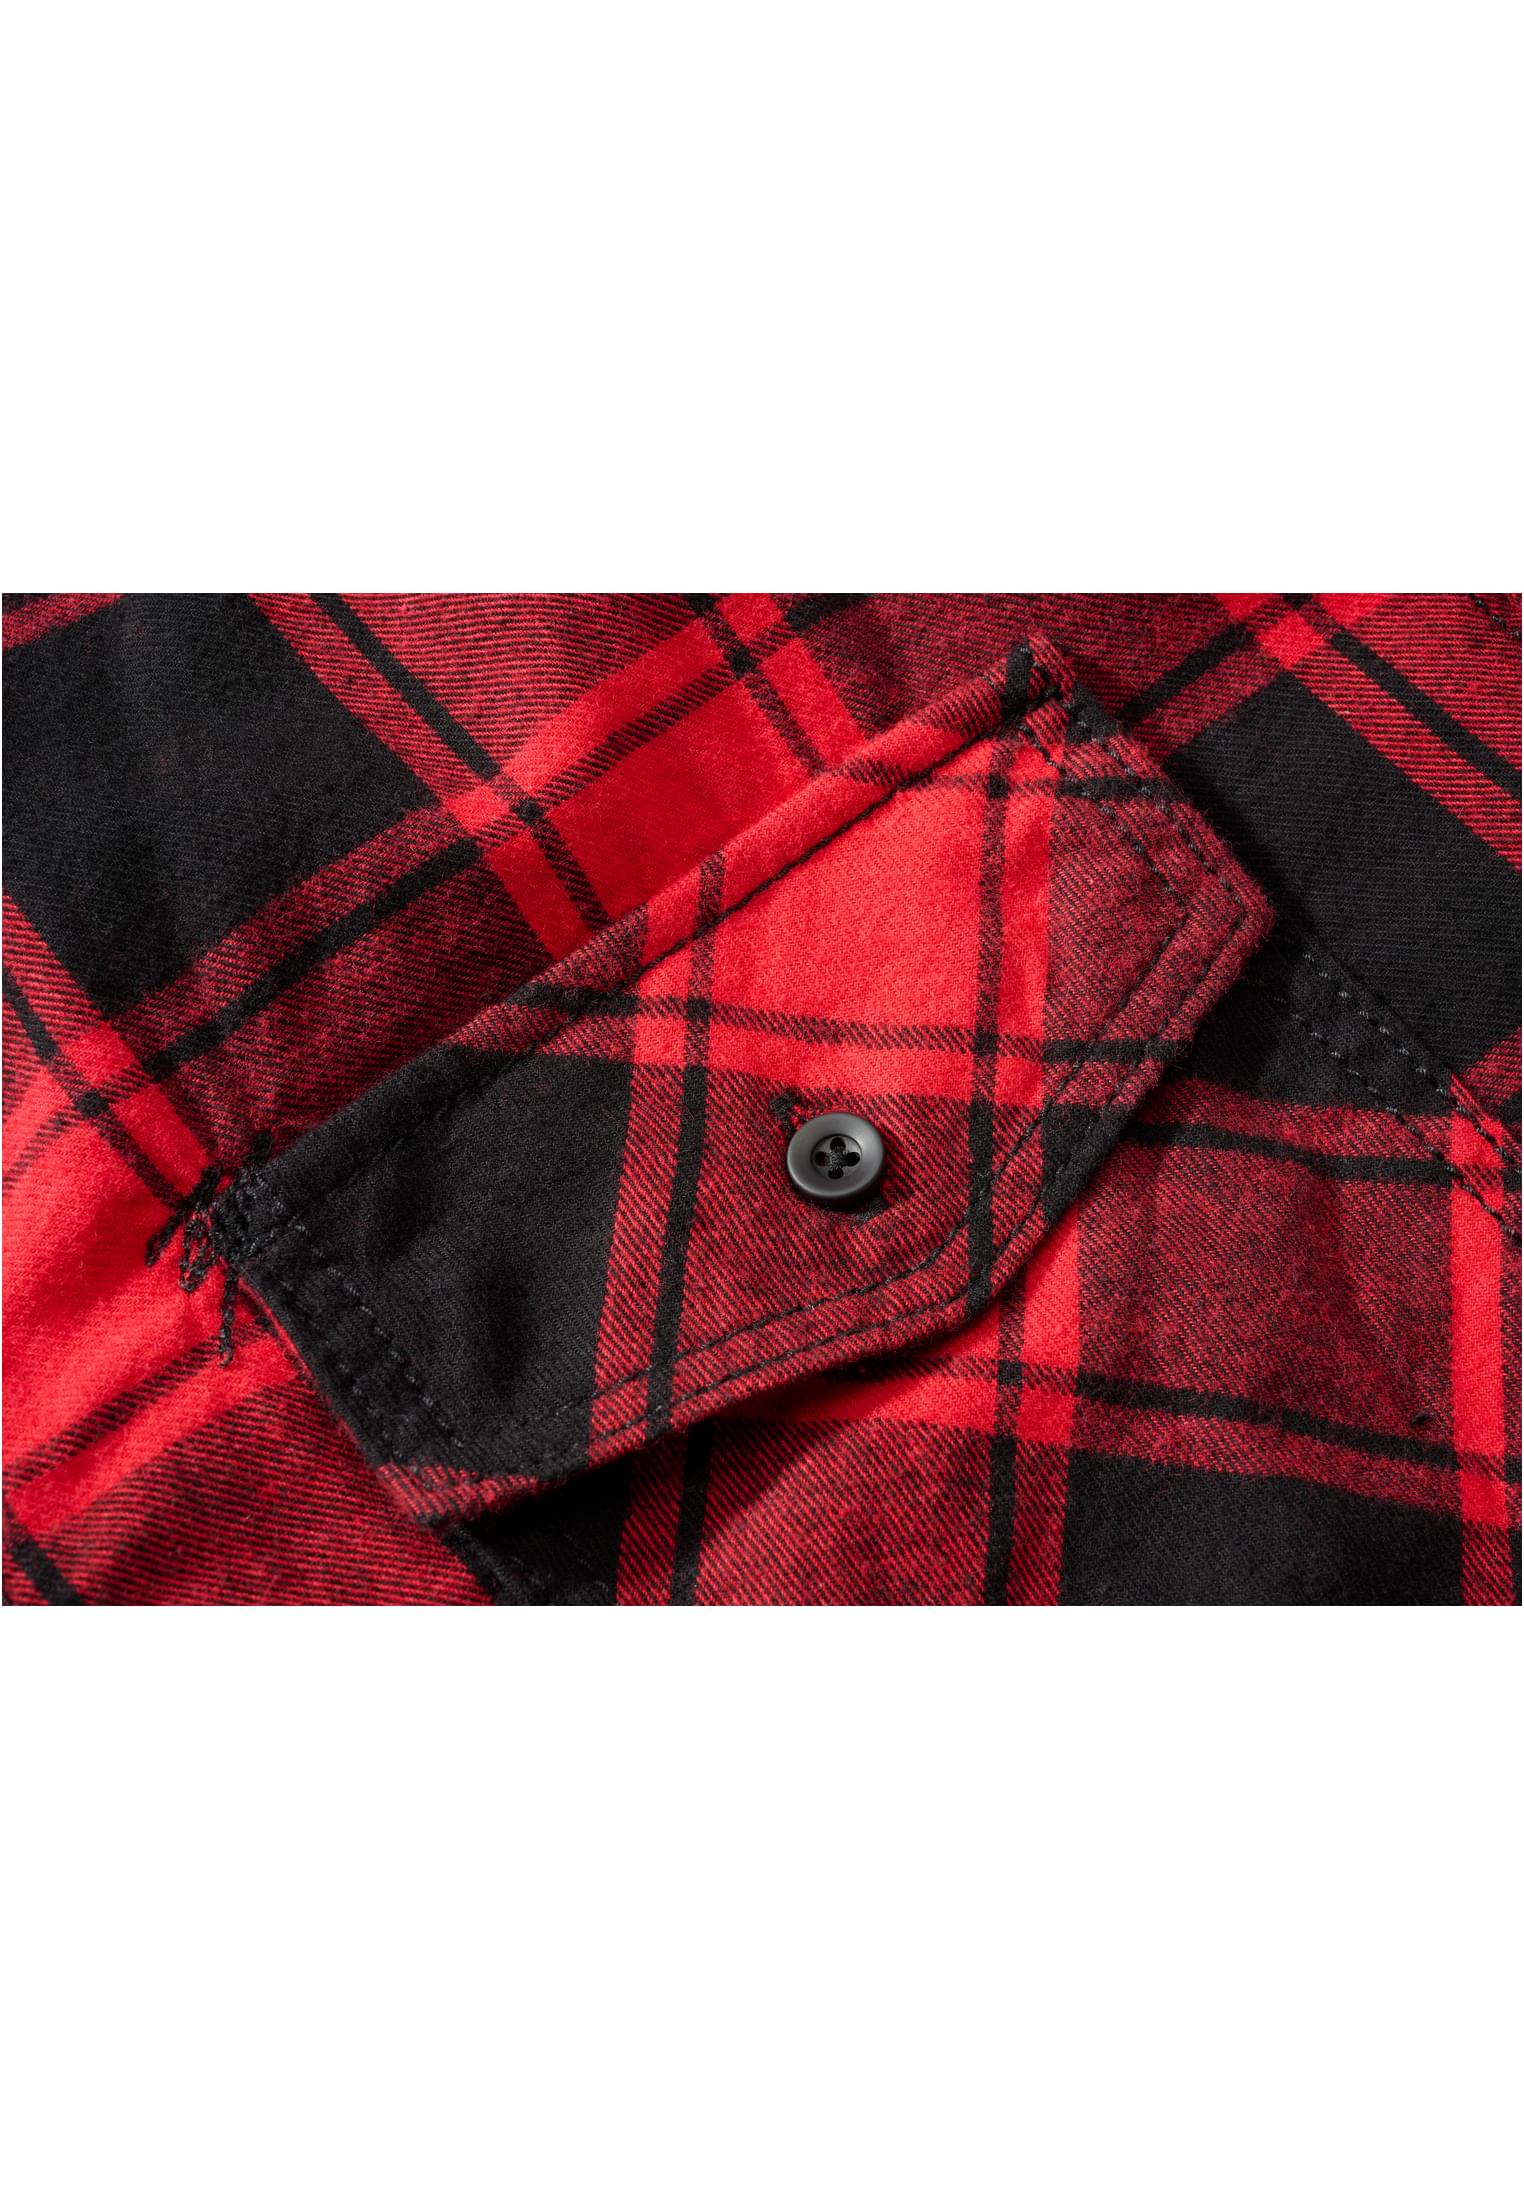 Pullover Checkshirt Halfsleeve in Farbe red/black